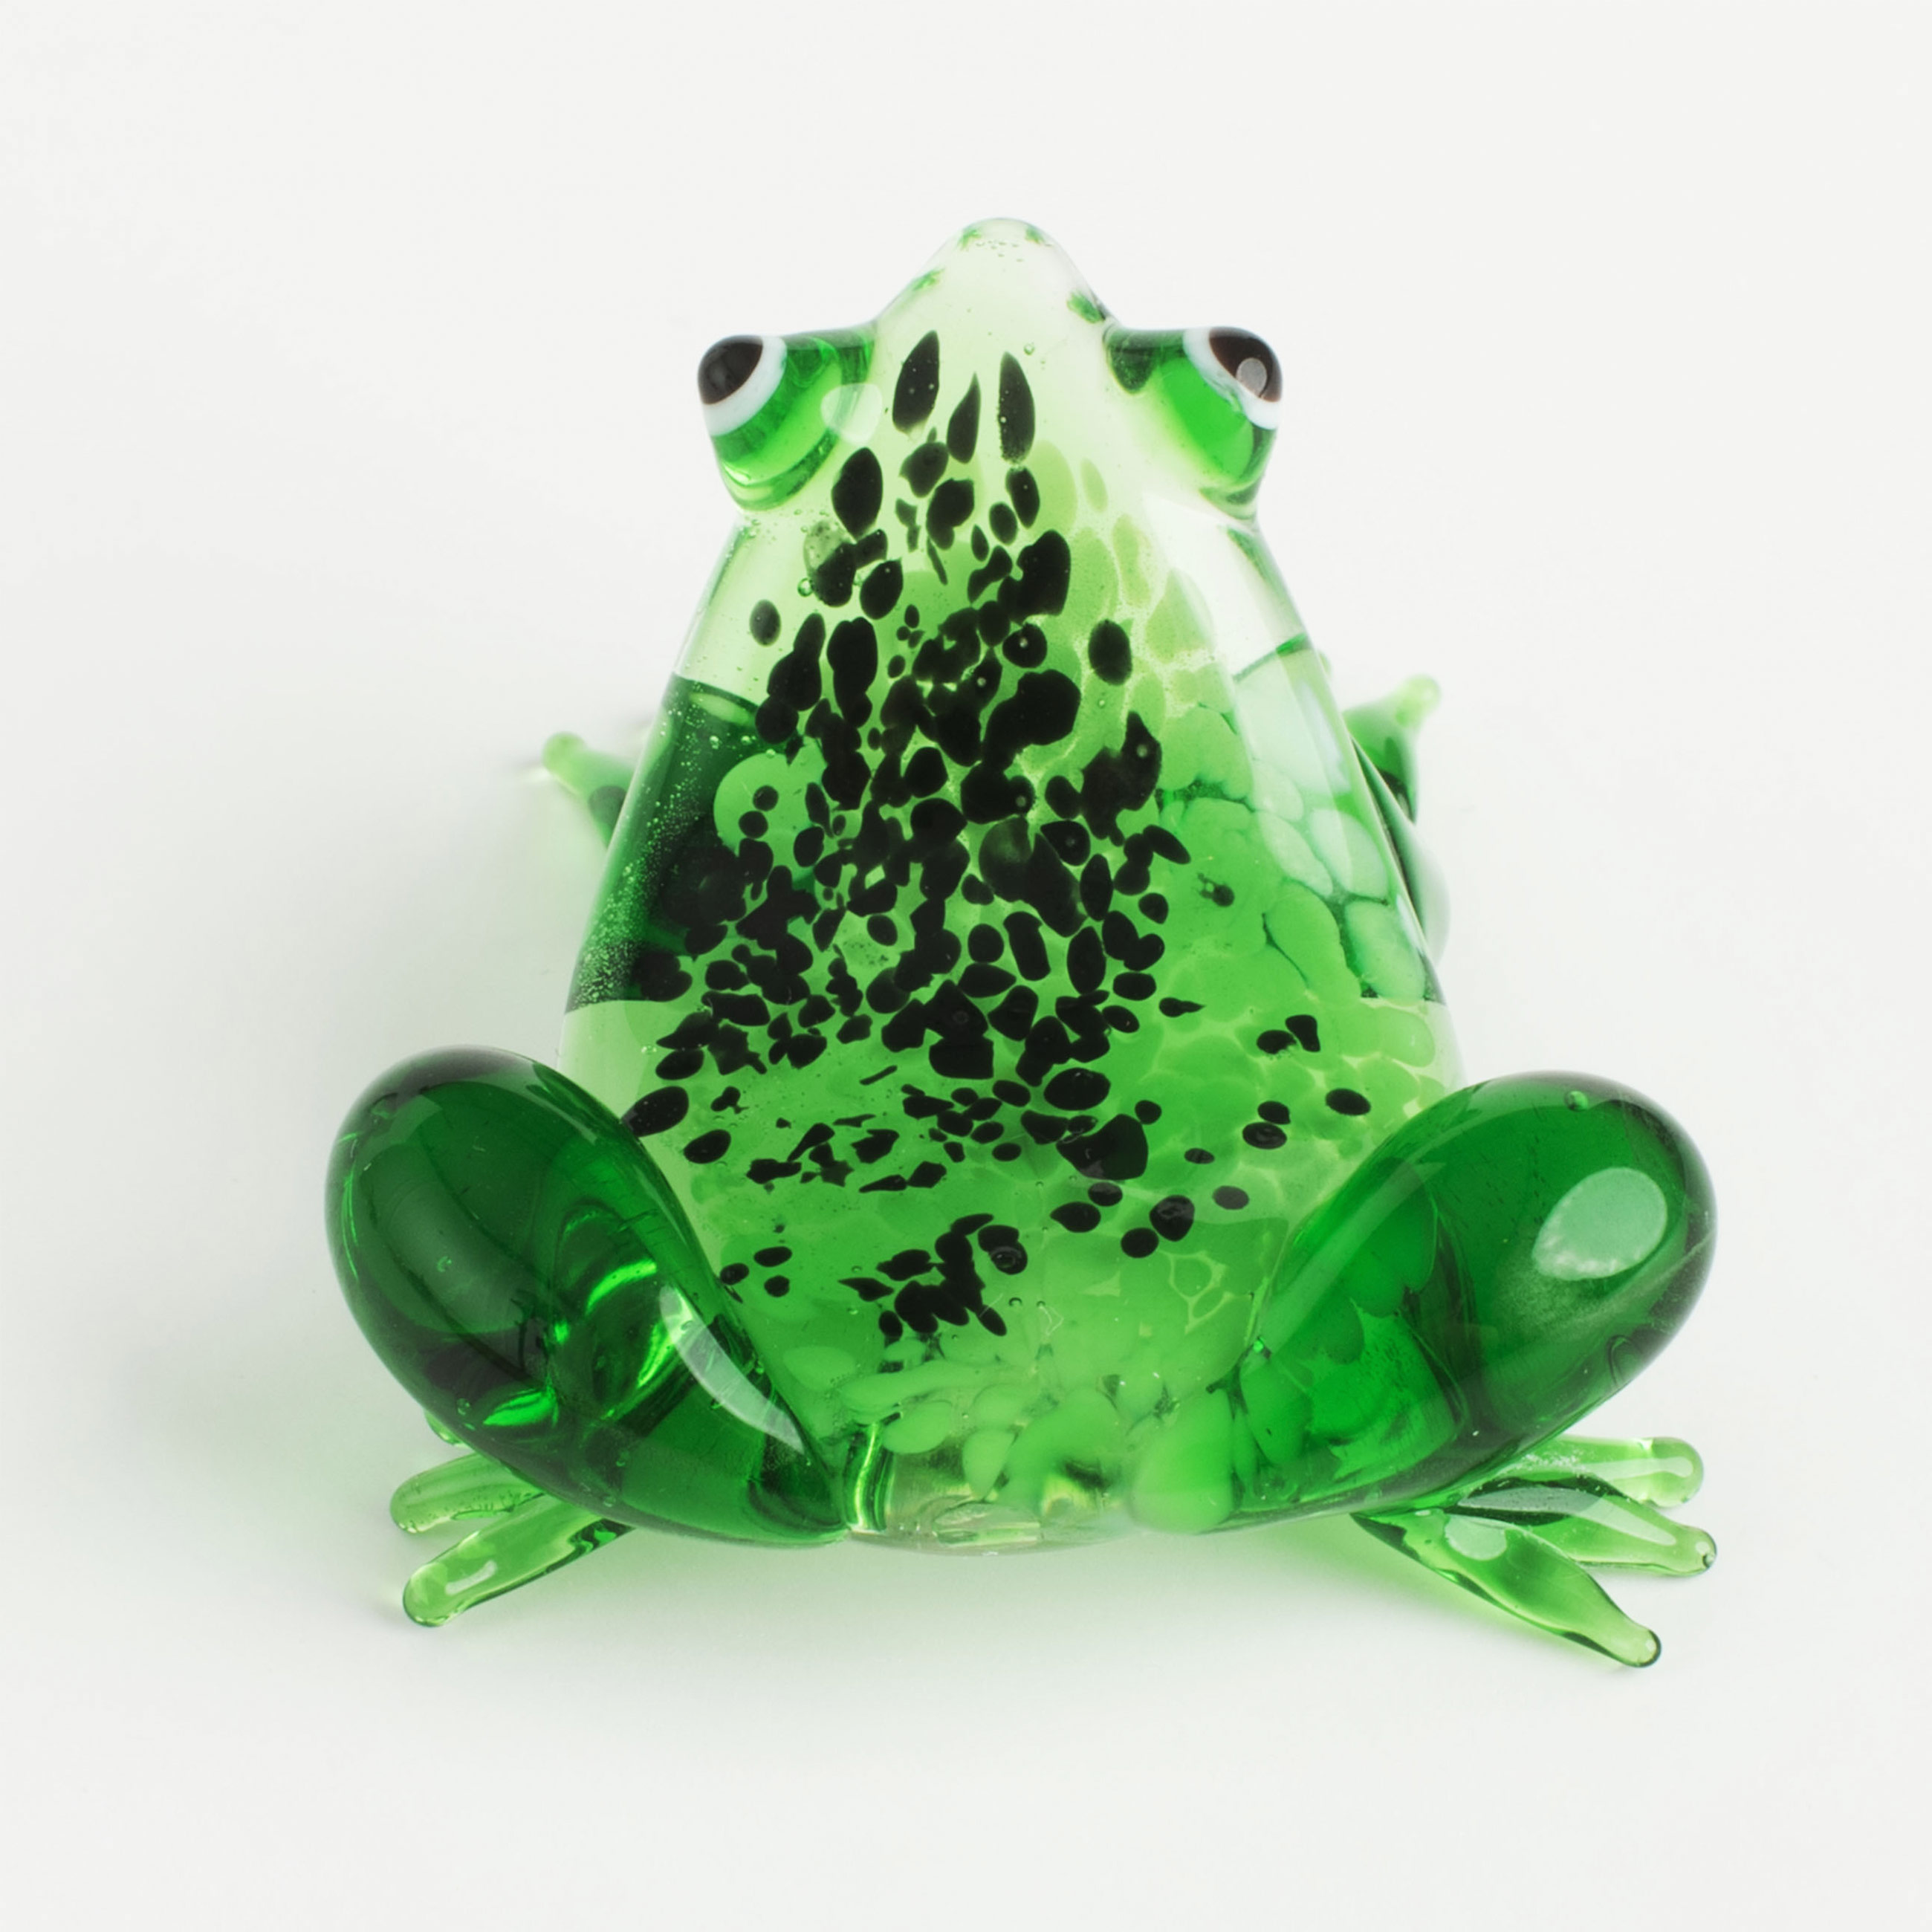 Statuette, 5 cm, glass, green, Frog, Vitreous изображение № 5